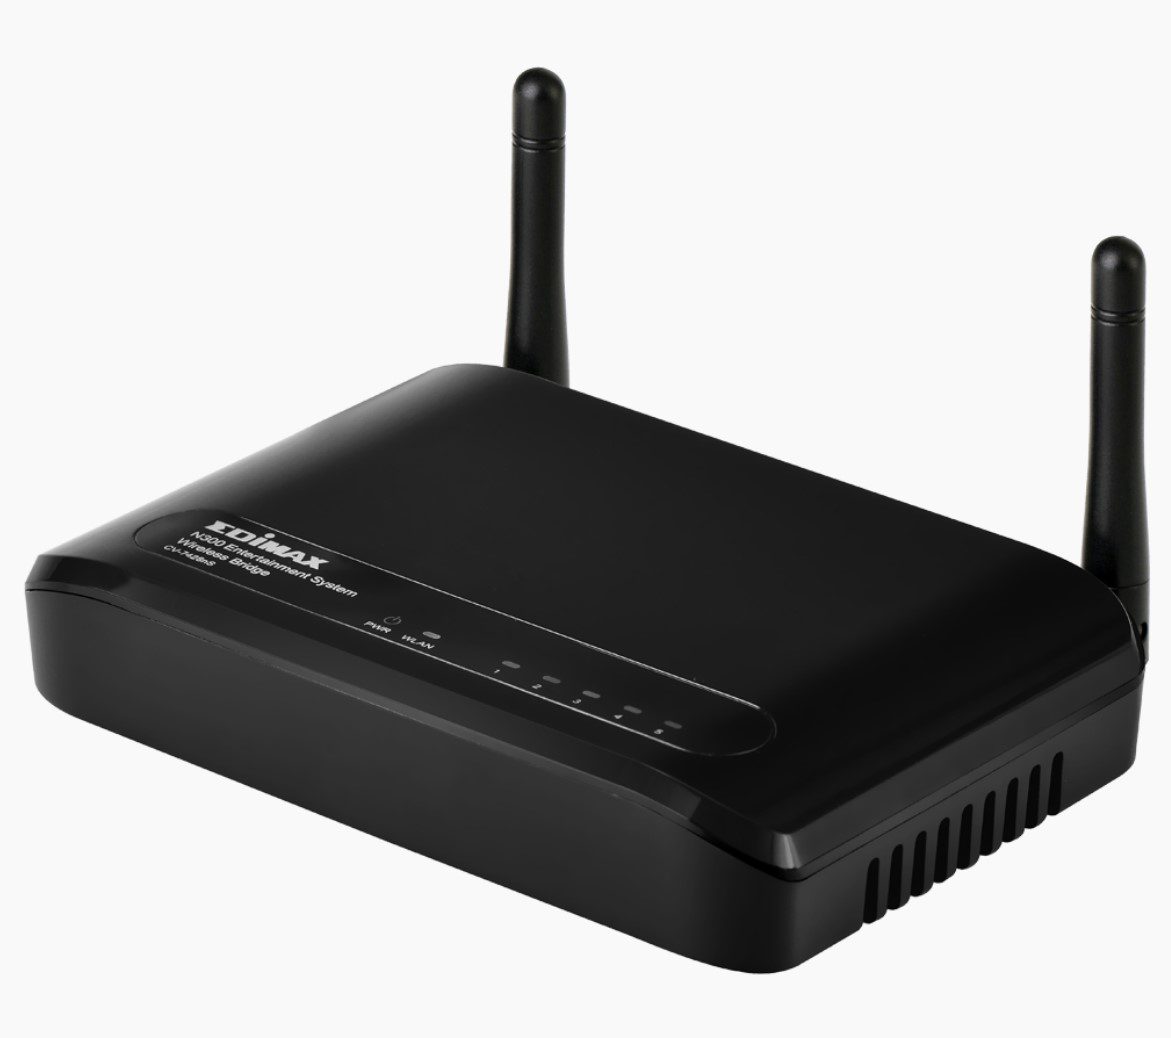 N300 Universal Wi-Fi Bridge für Smart TV, Blu-ray und Gaming CV-7428nS